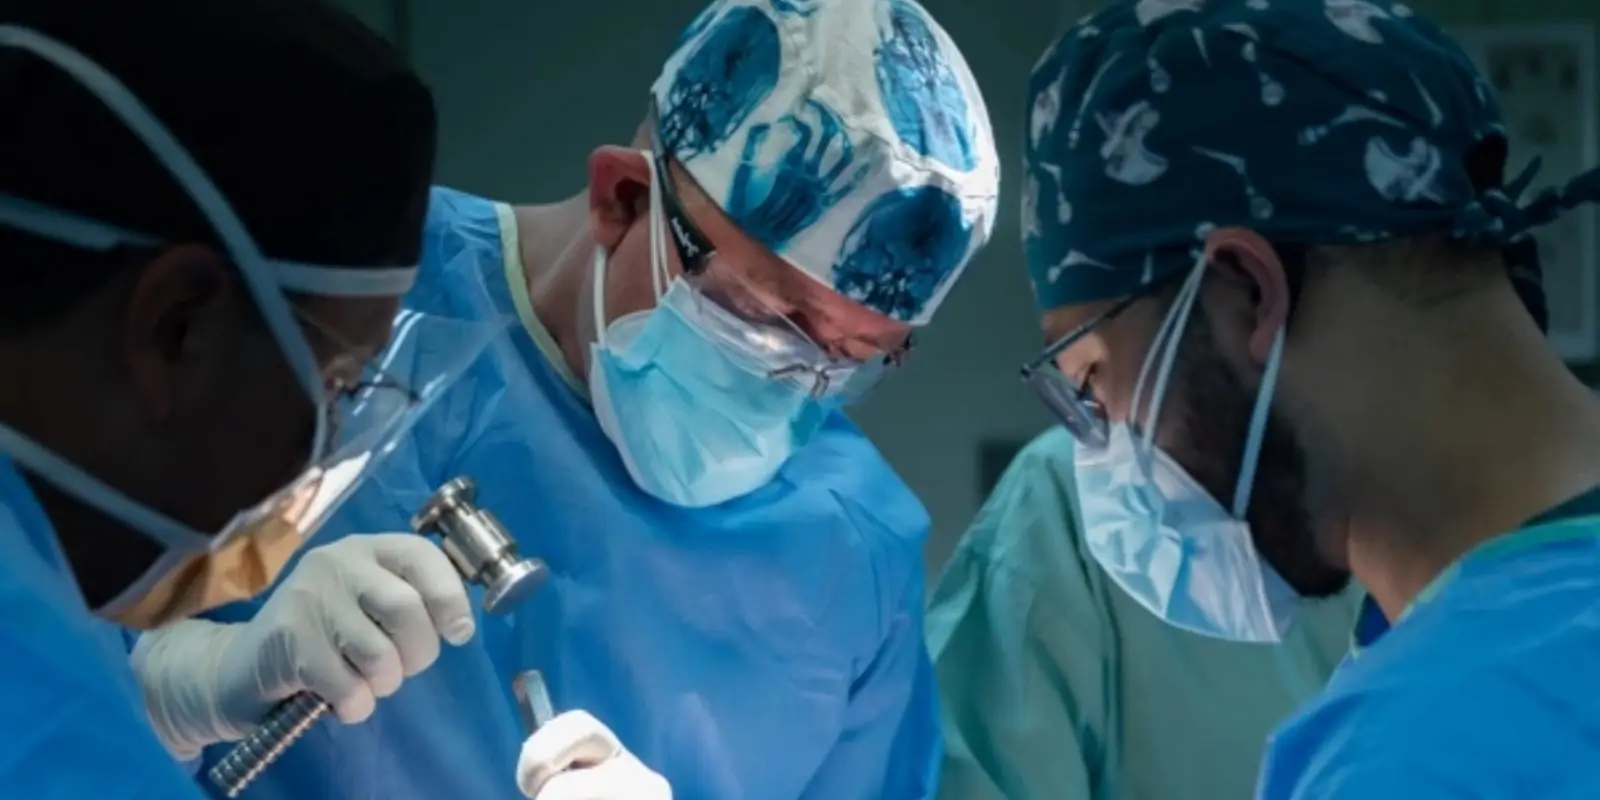 Orthopedic Surgeon Military Doctor Team Helps Community